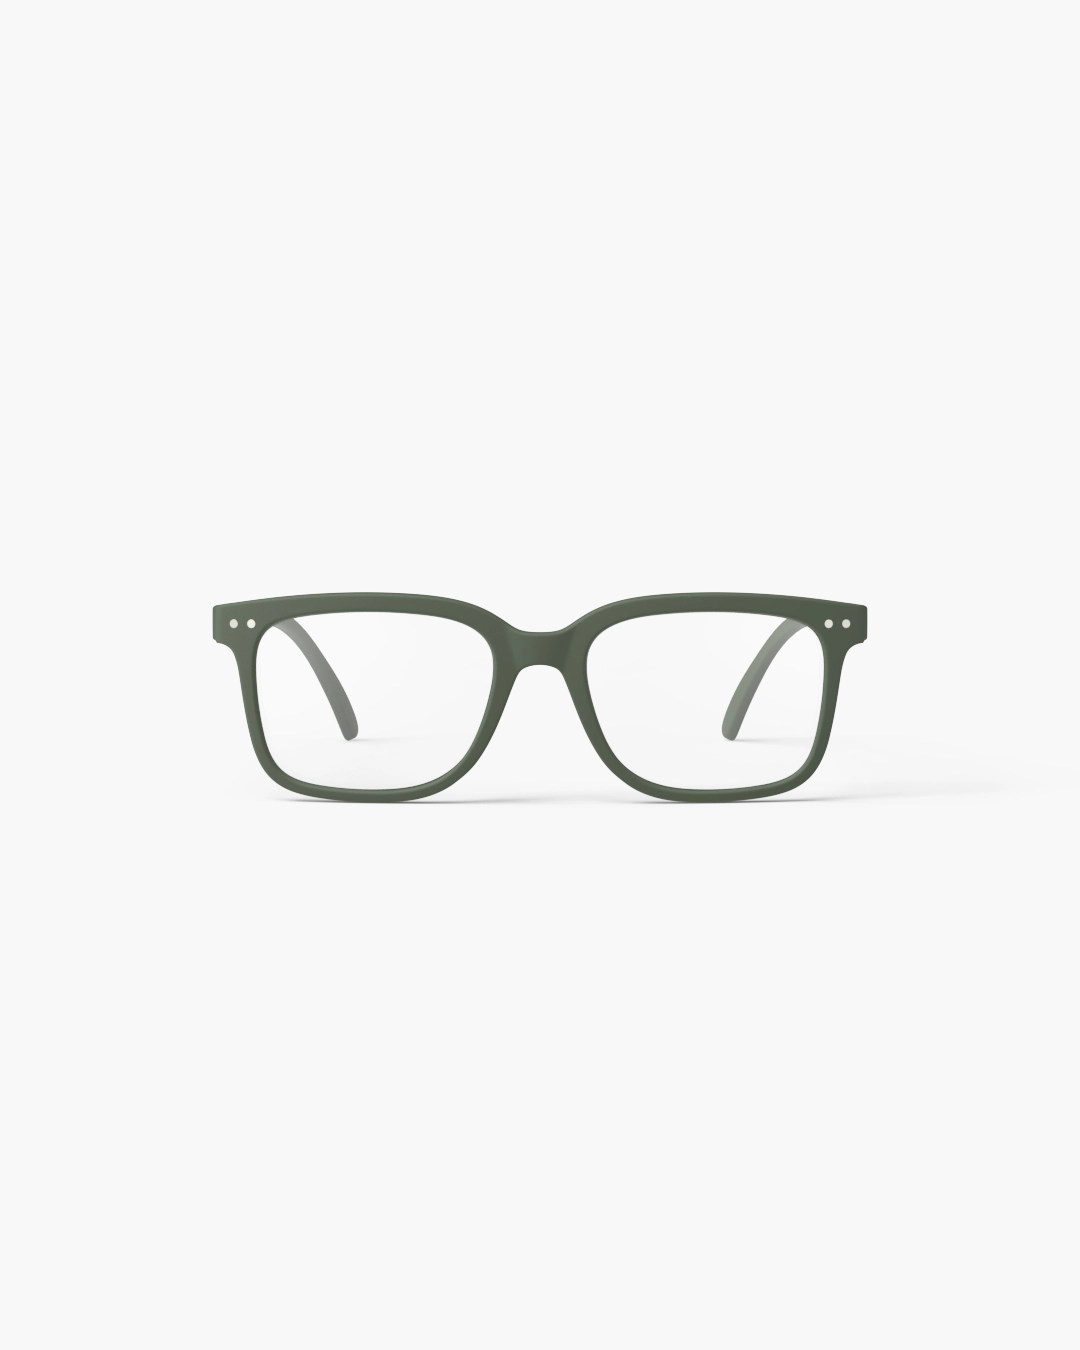 IZIPIZI #L Kaki Green Reading Glasses